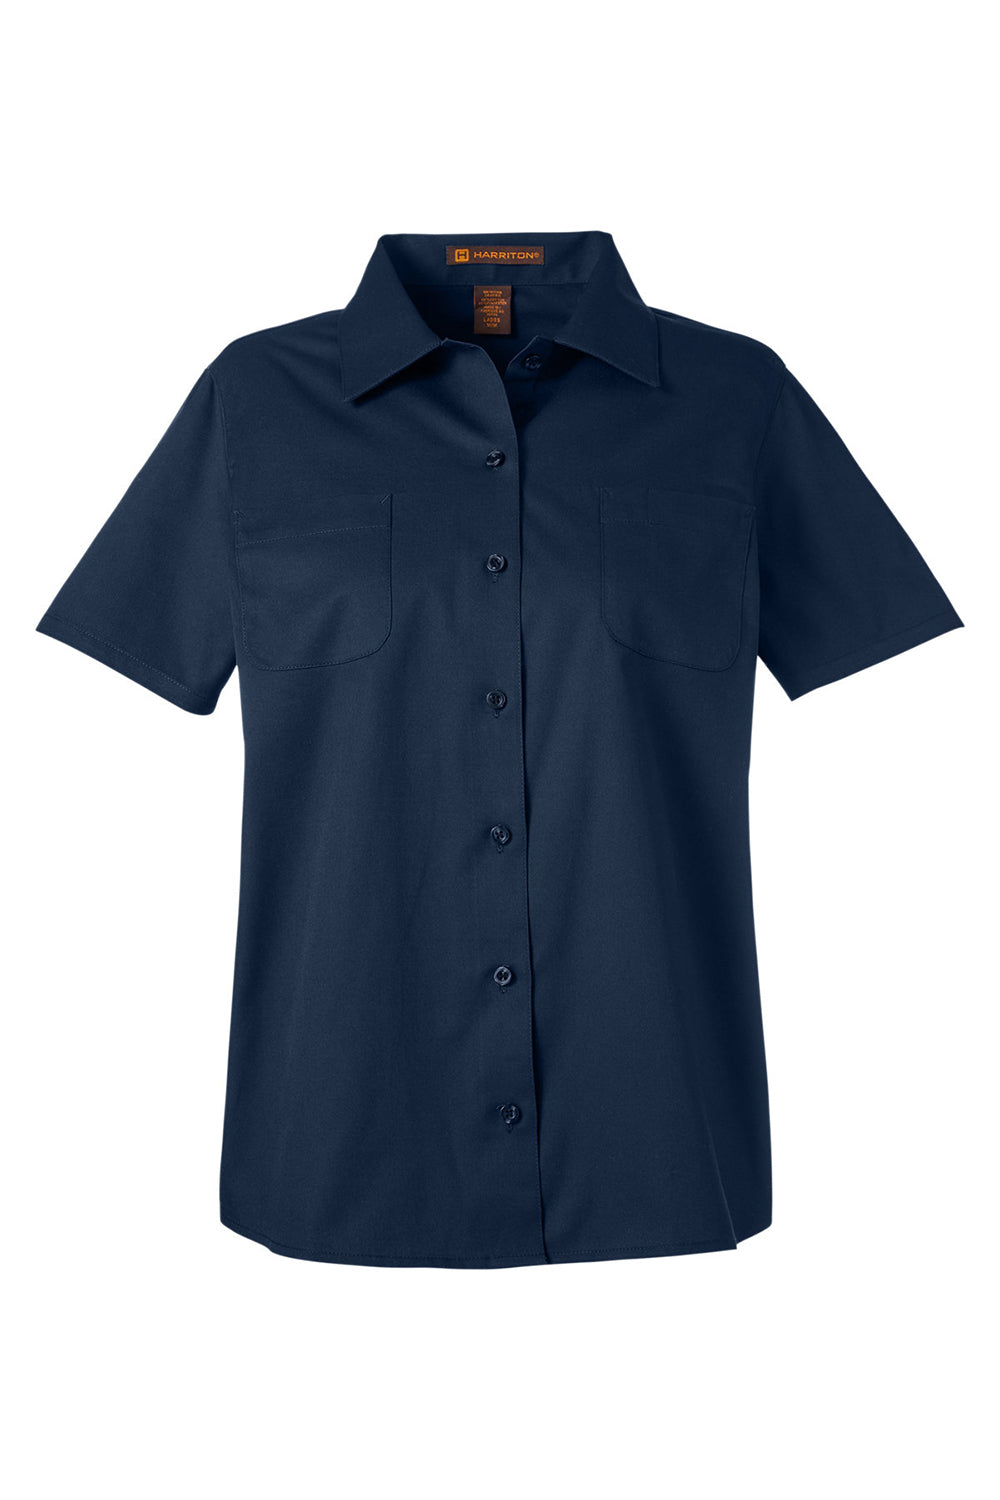 Harriton M585W Womens Advantage Short Sleeve Button Down Shirt w/ Double Pockets Dark Navy Blue Flat Front